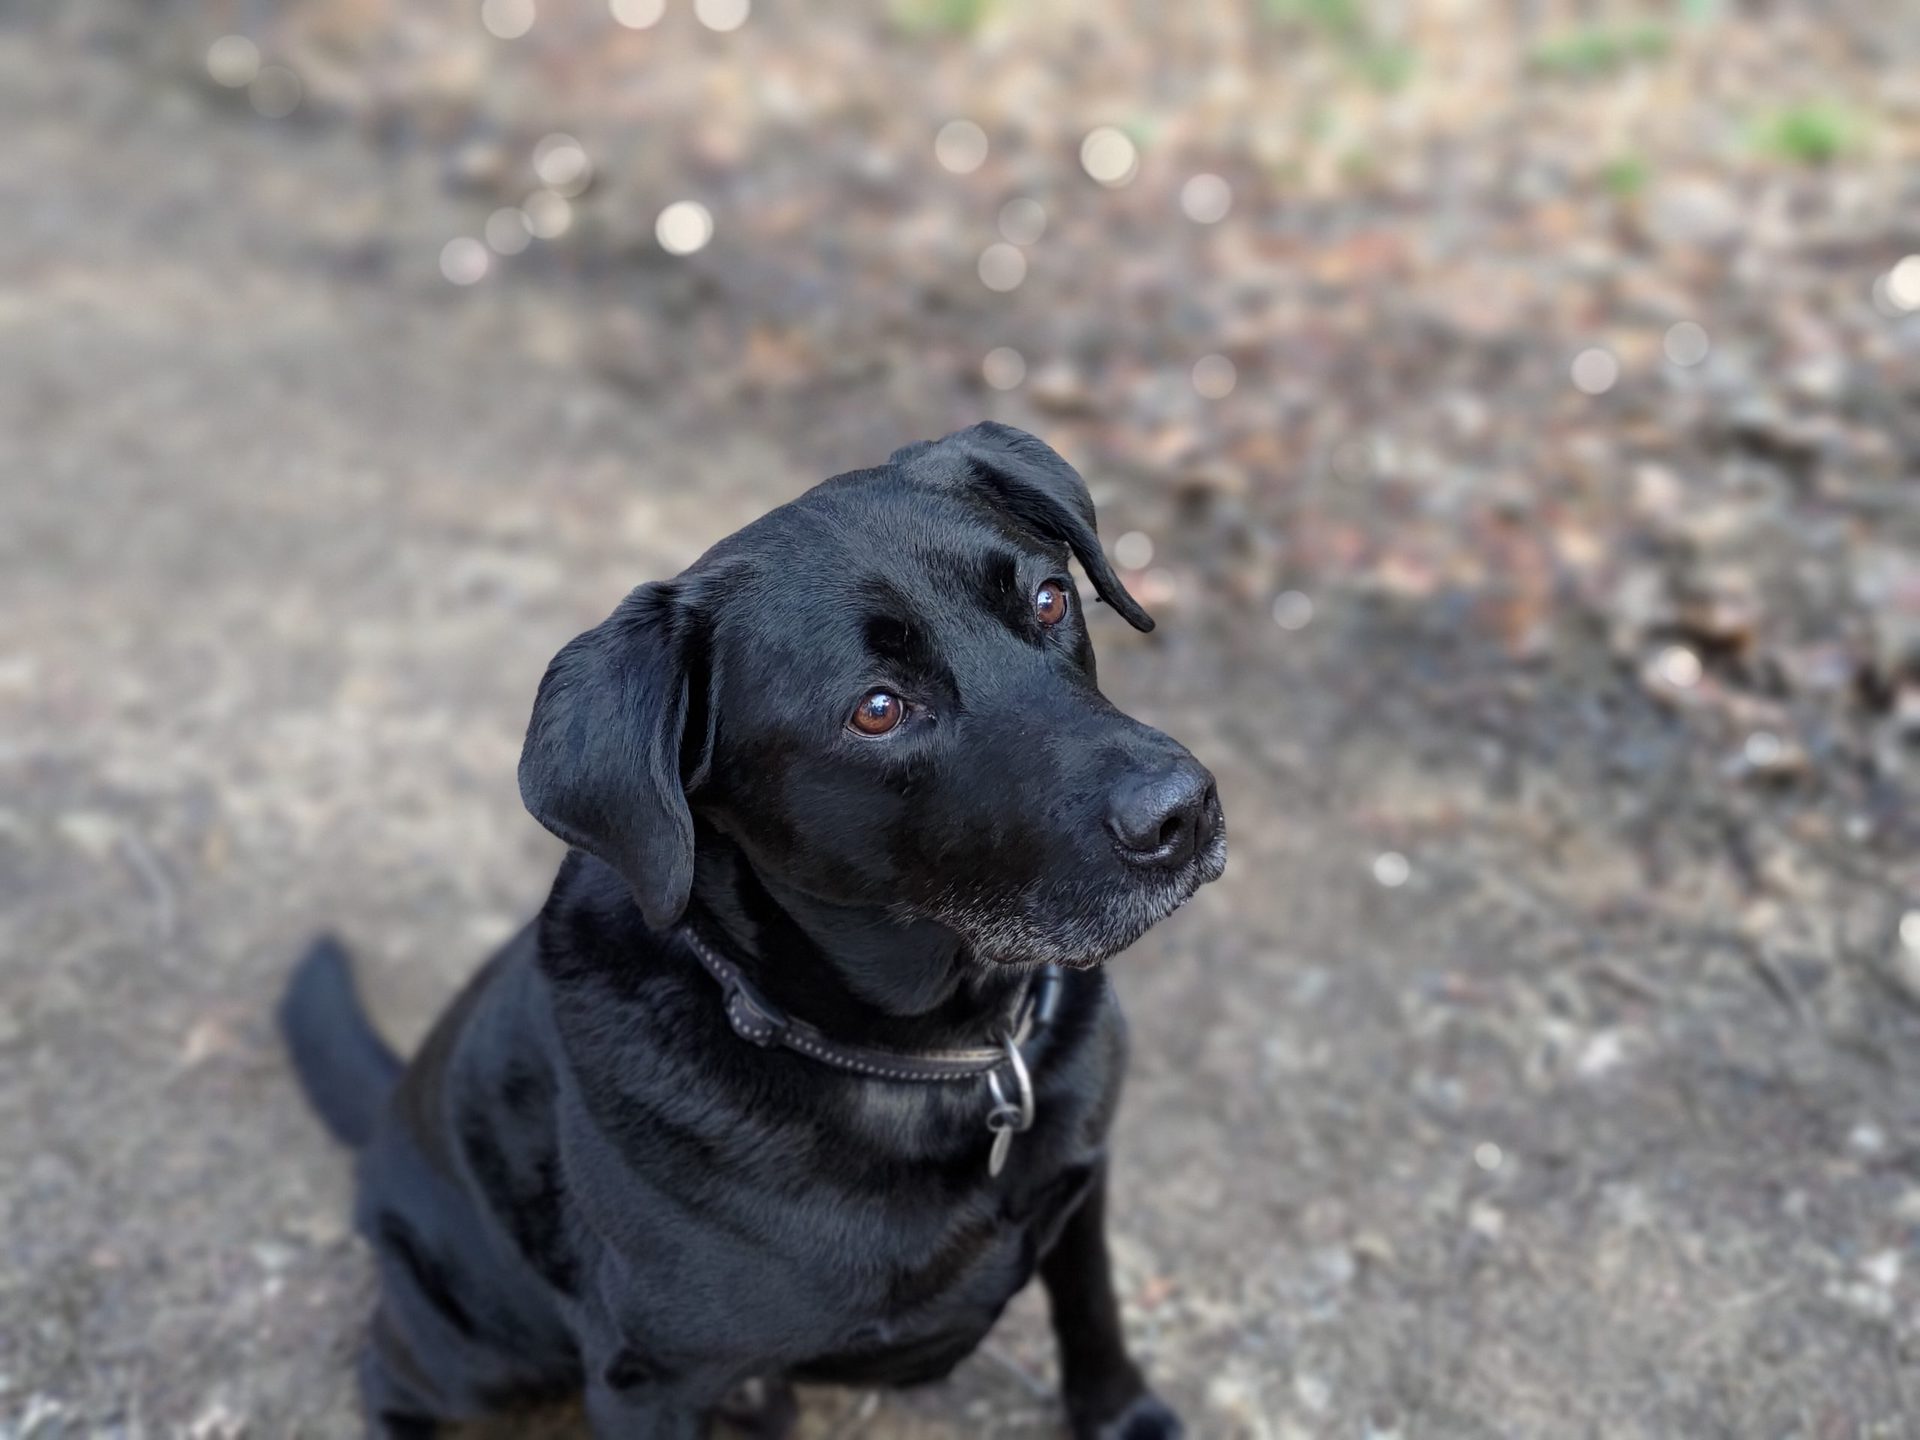 ROG Phone 5 portrait camera sample of a happy dog